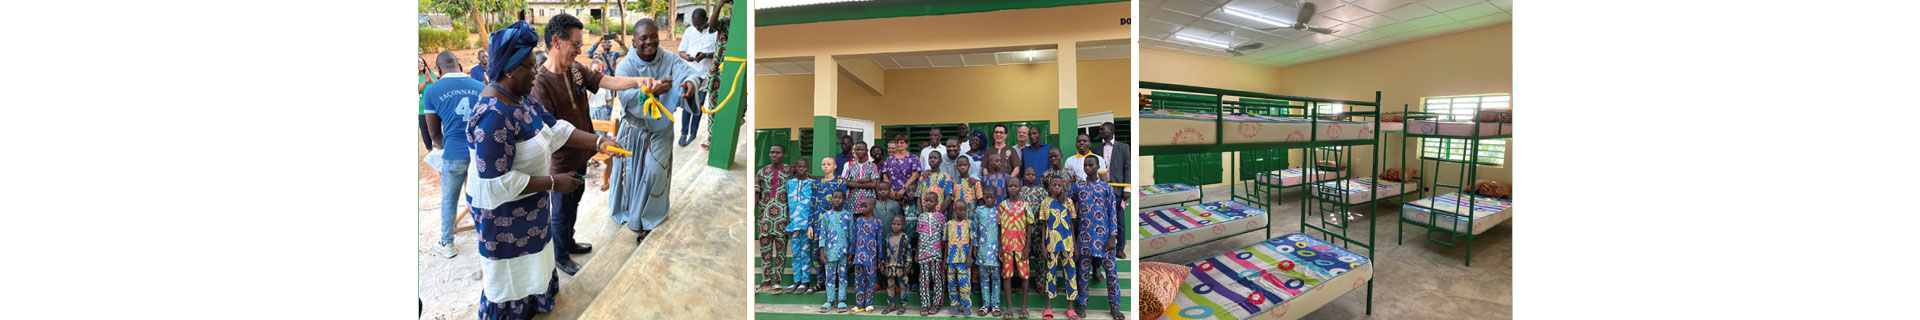 BOA Foundation activities in Benin